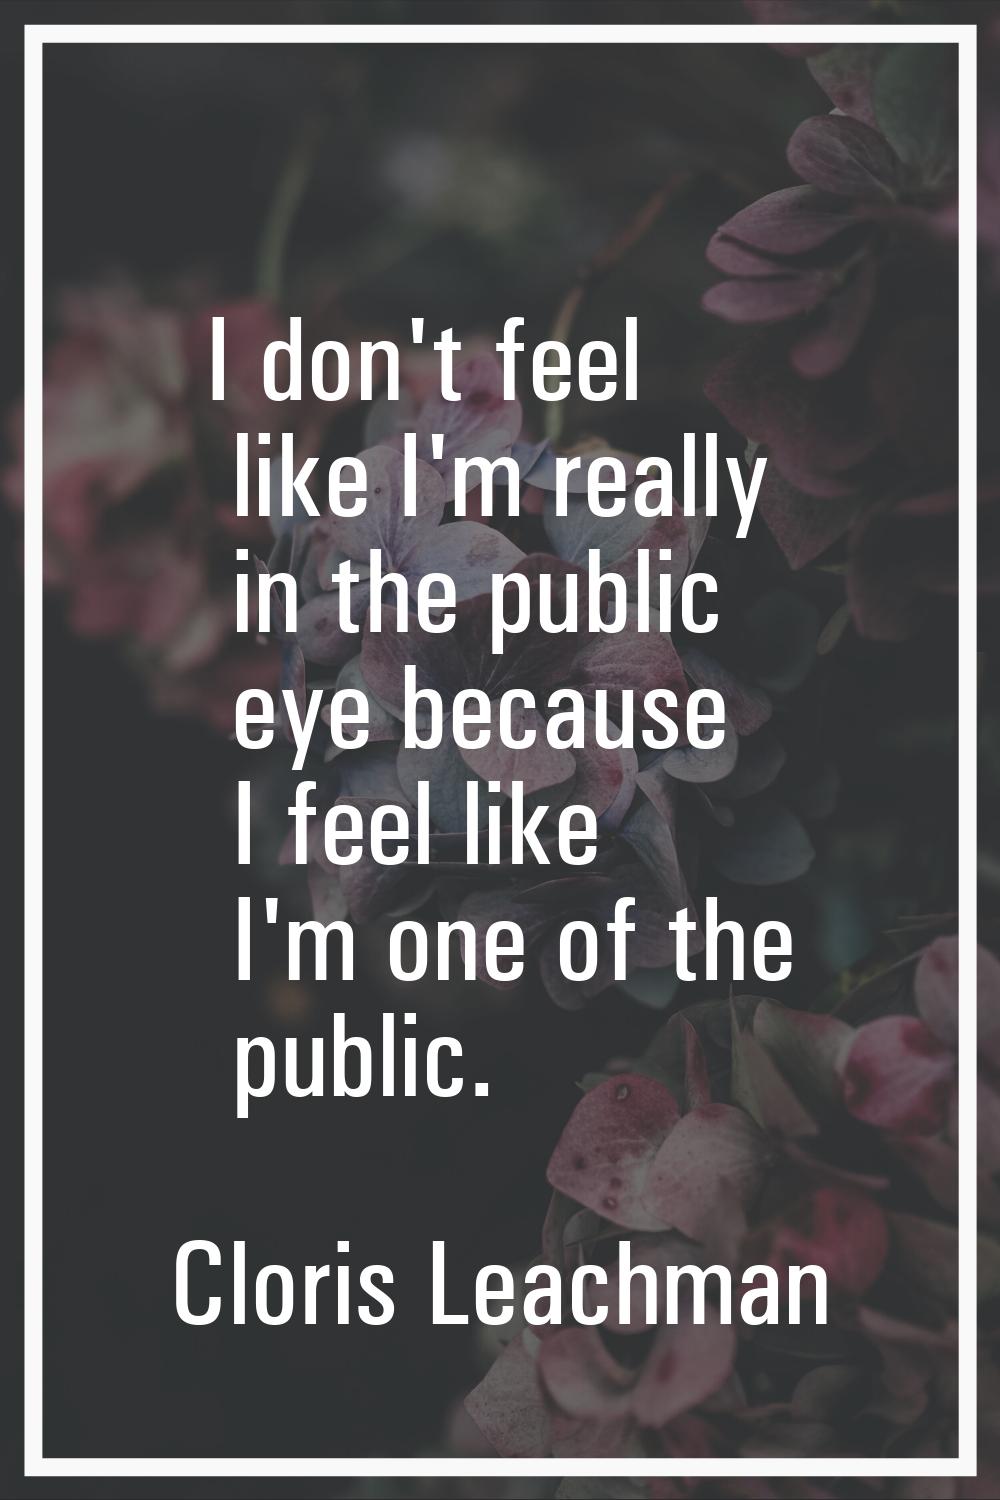 I don't feel like I'm really in the public eye because I feel like I'm one of the public.